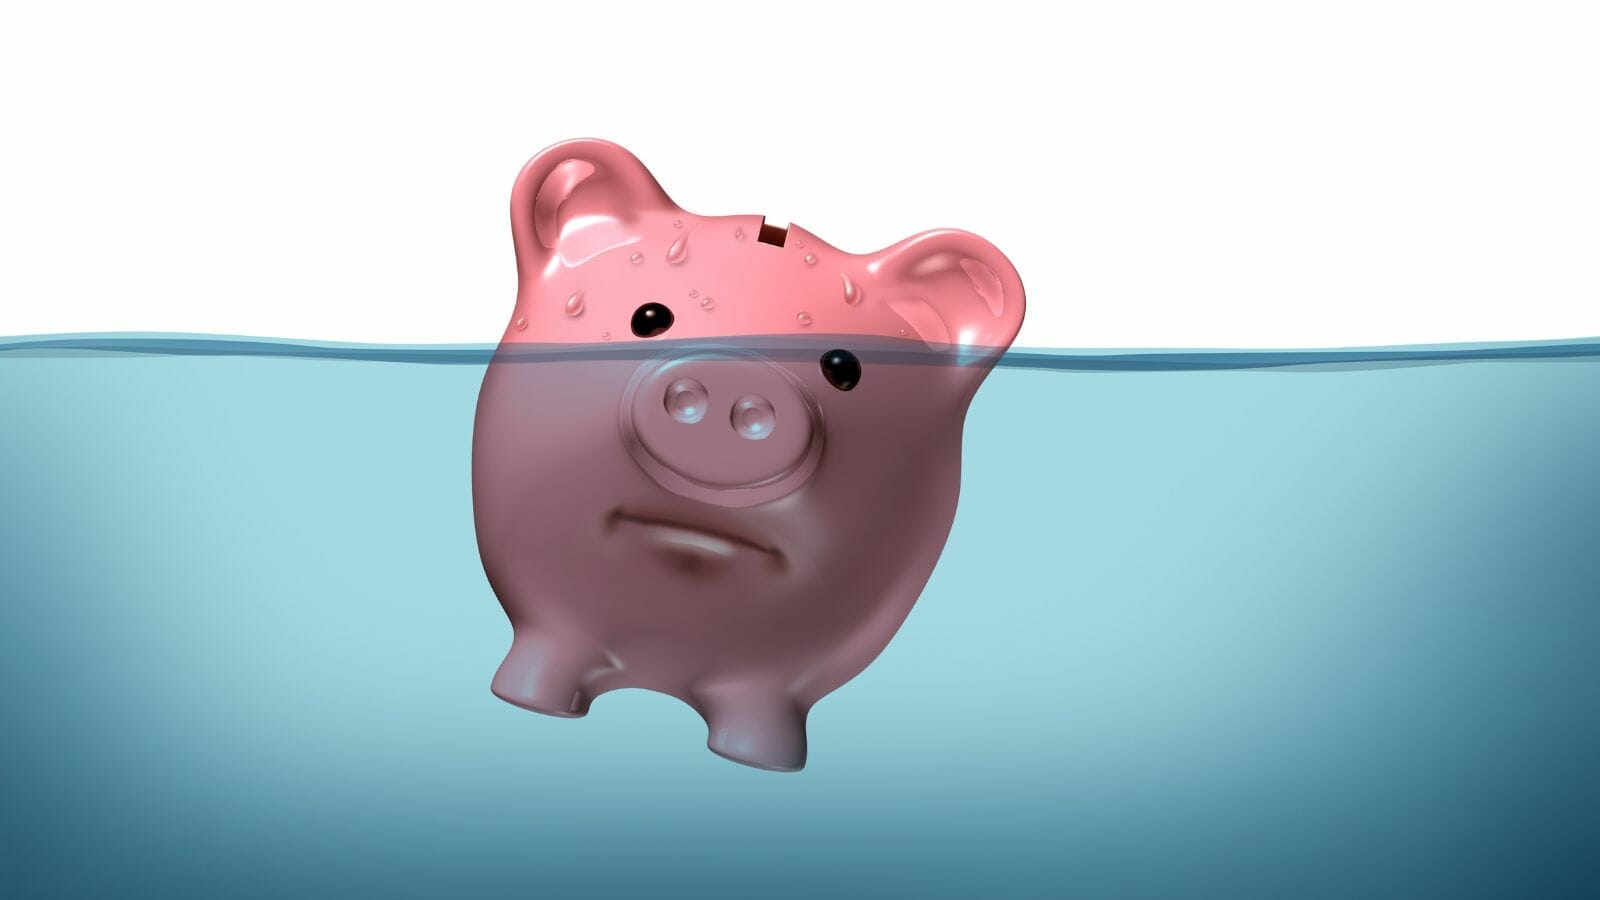 A piggy bank in water

